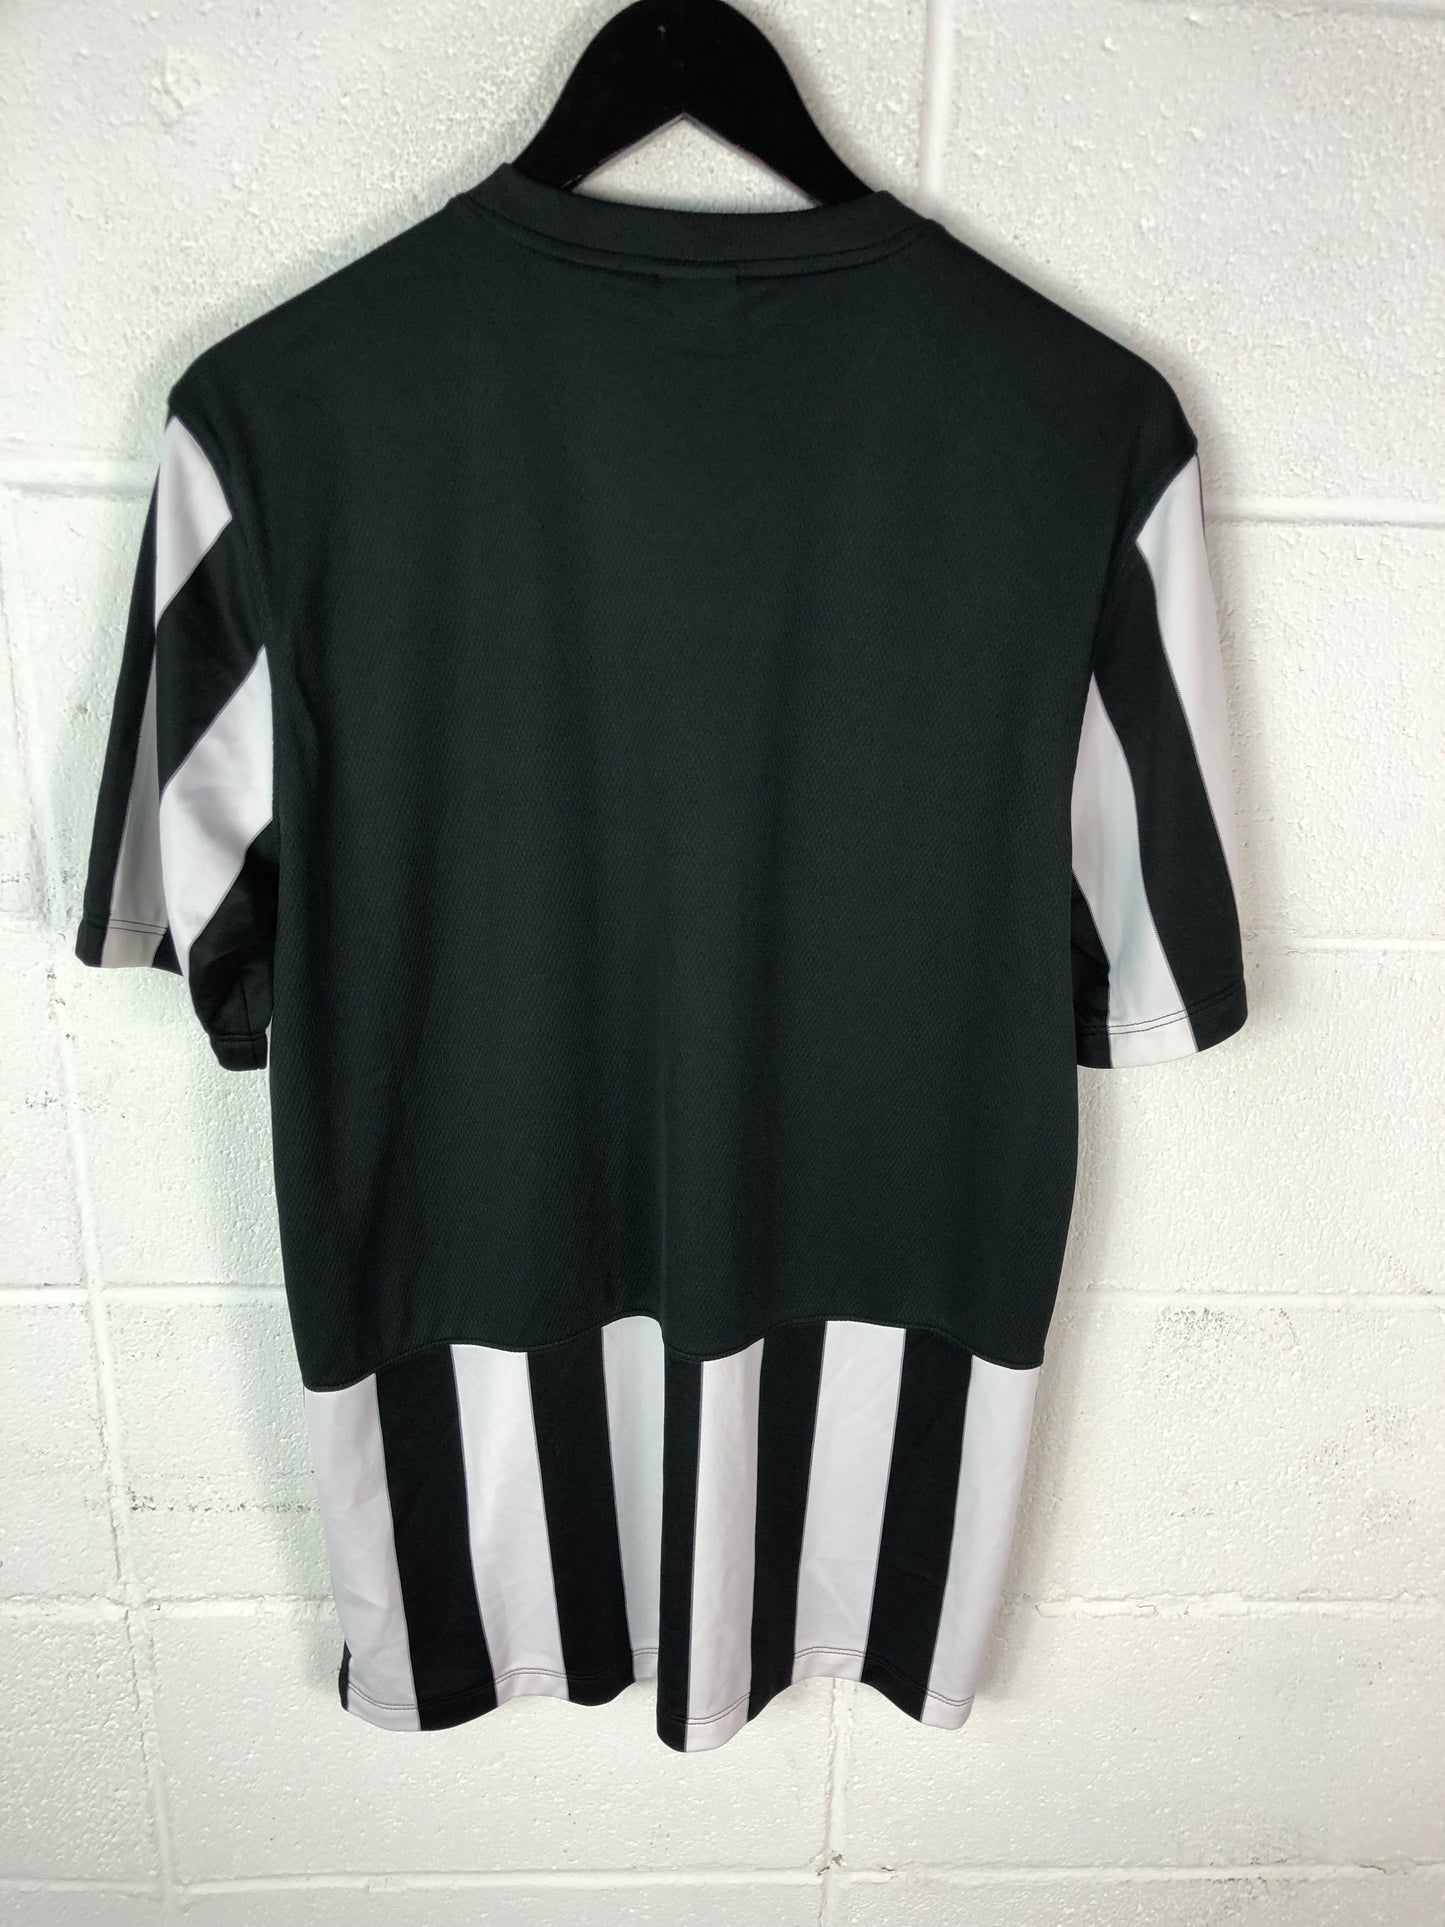 Nike Striped Soccer Jersey Sz Med